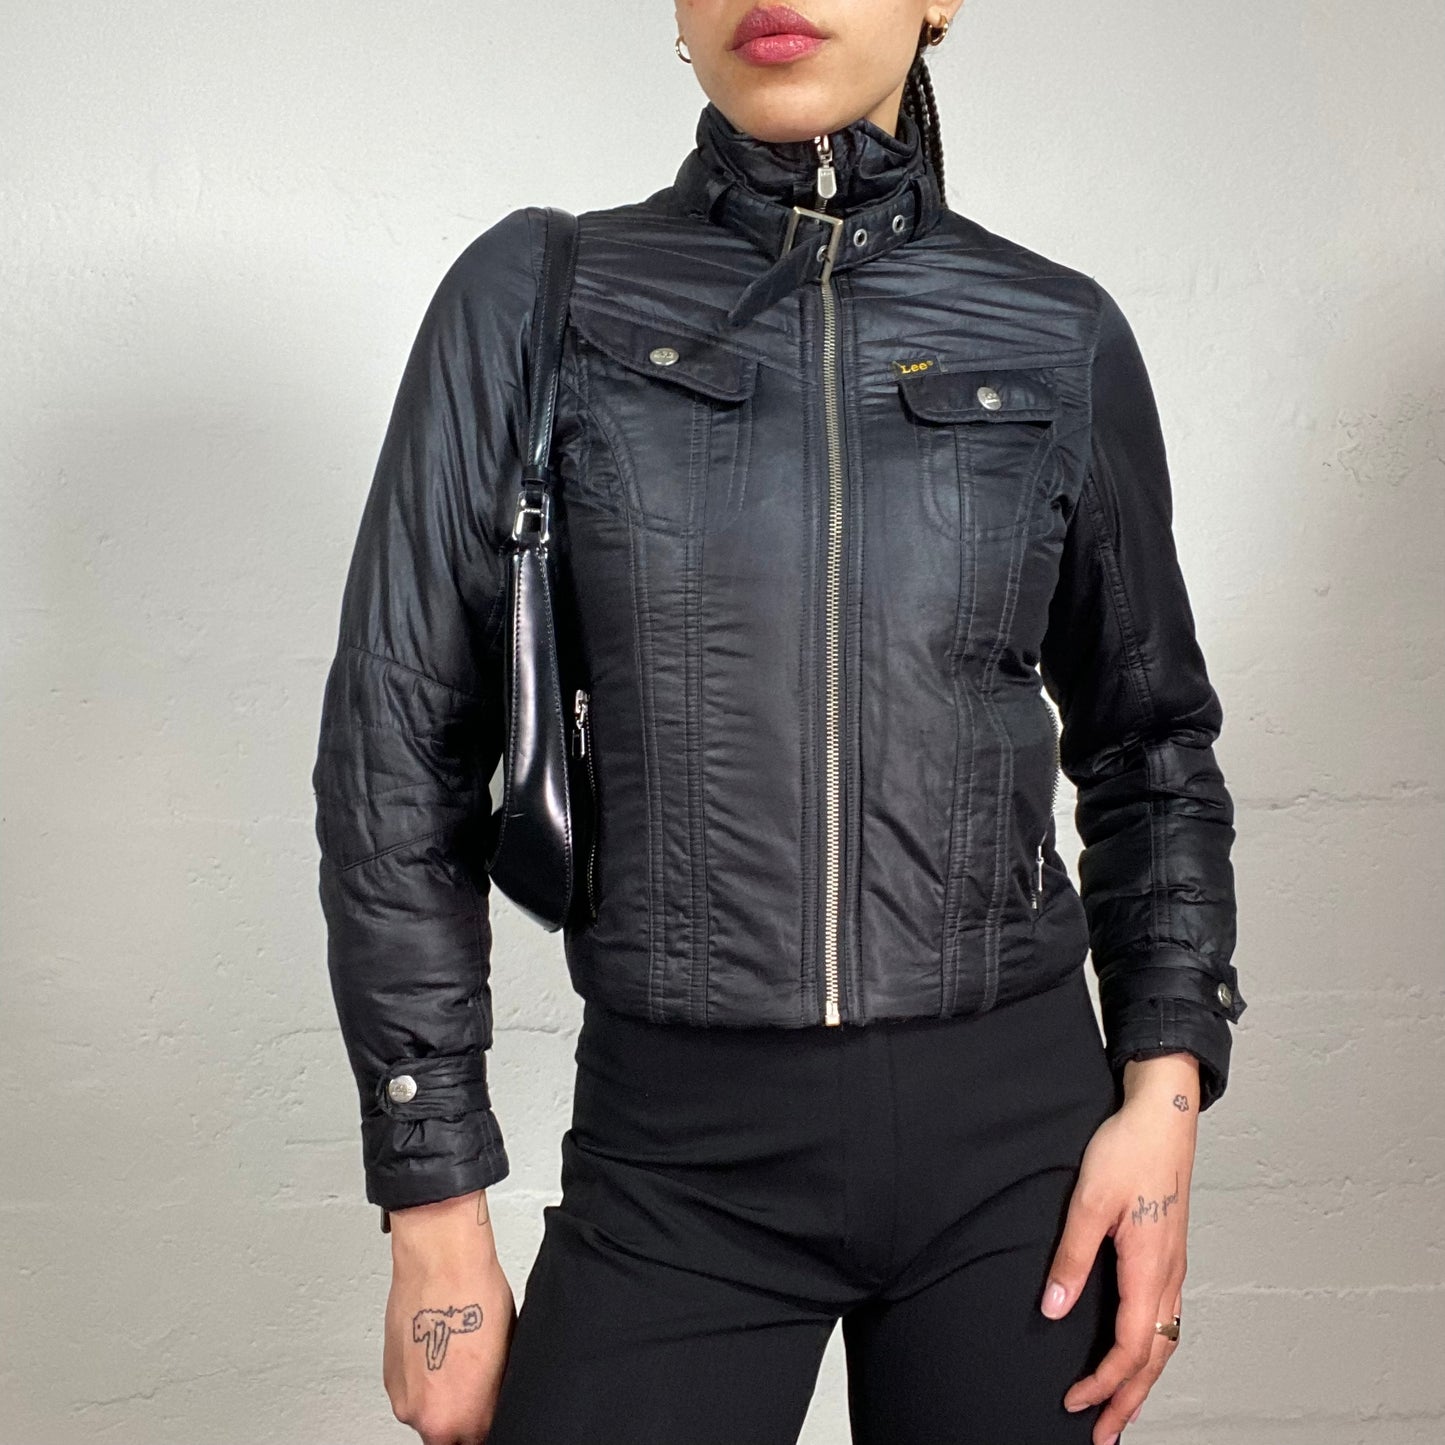 Vintage 2000's Biker Girl Black Puffy Nylon Zip Up Jacket with Neck Belt (XS)